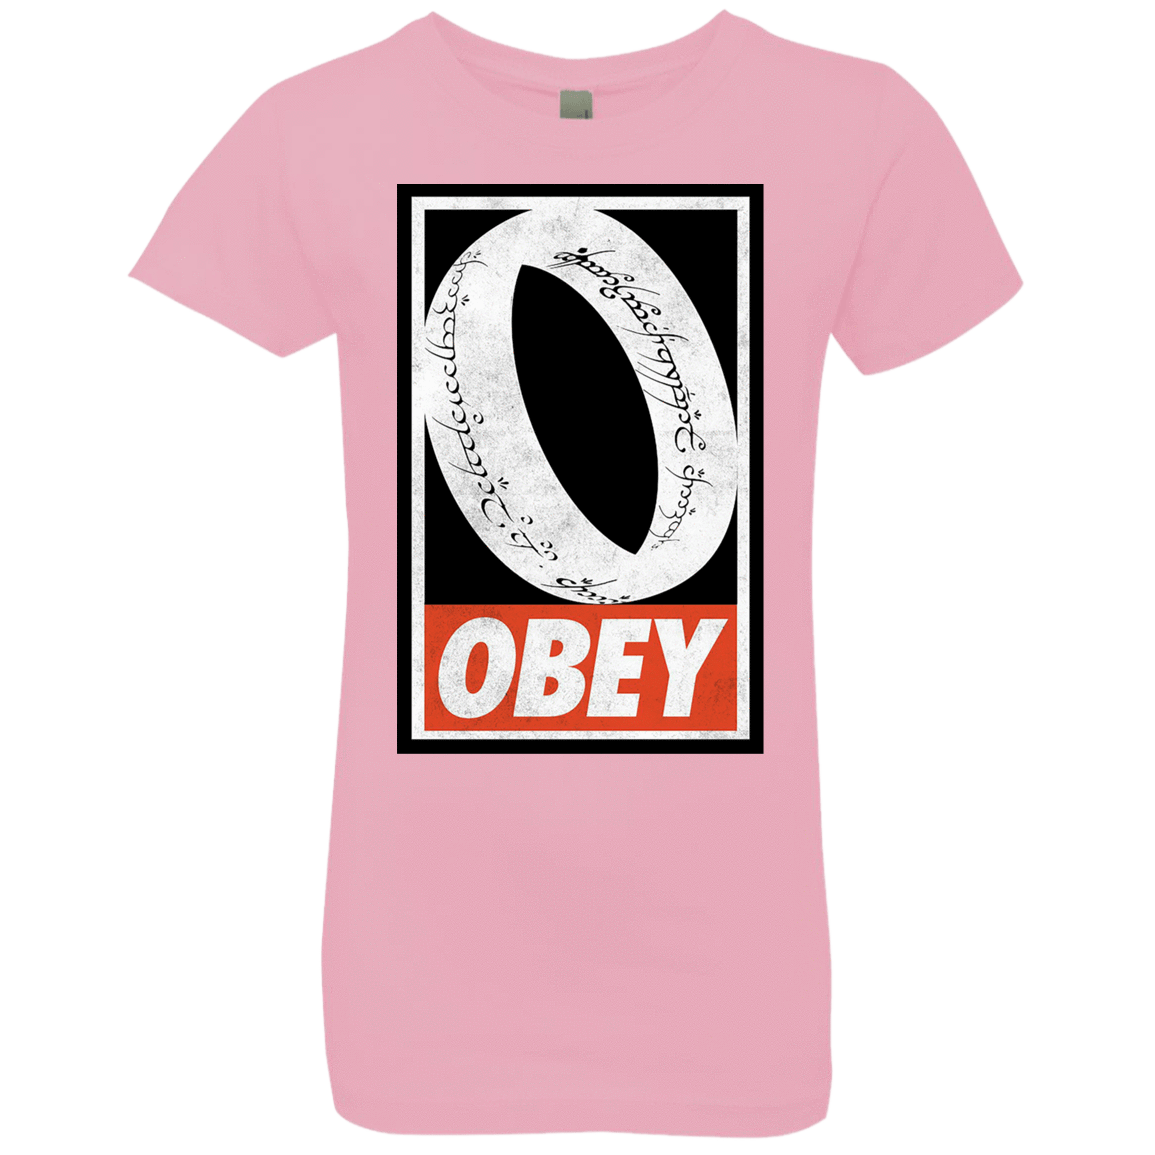 T-Shirts Light Pink / YXS Obey One Ring Girls Premium T-Shirt